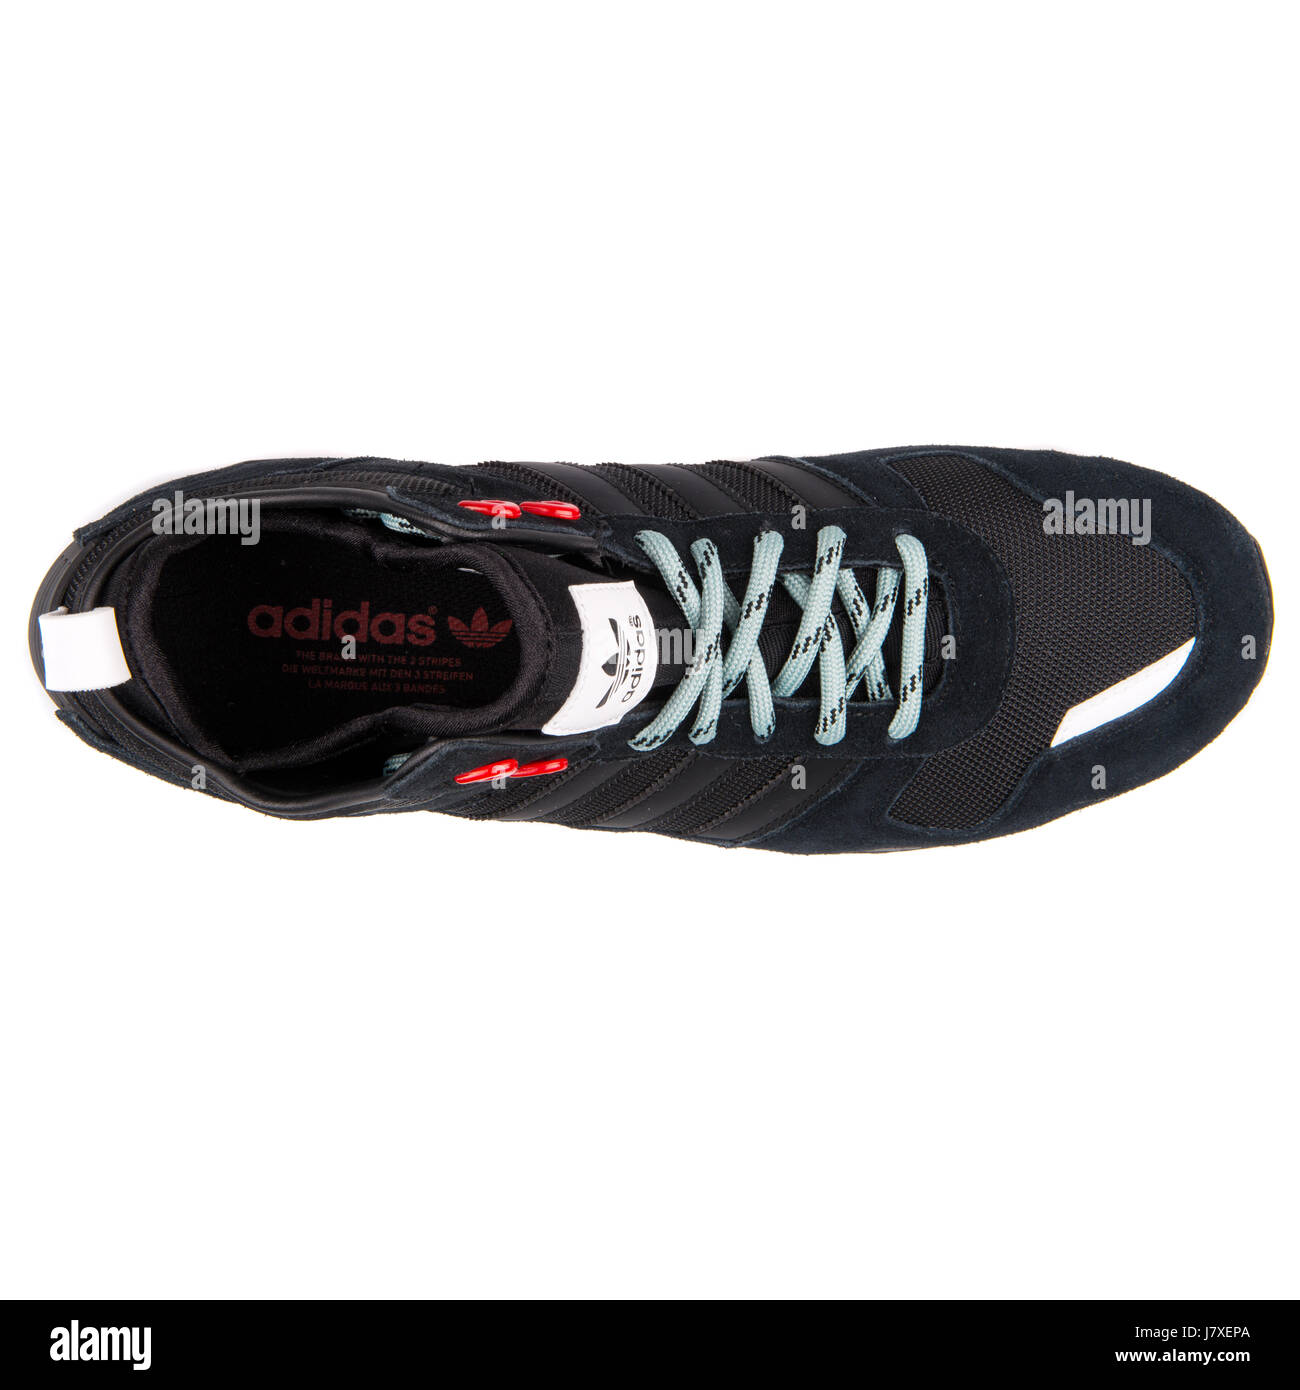 Adidas ZX700 Winter Men's black Sneakers - B35236 Photo Stock - Alamy